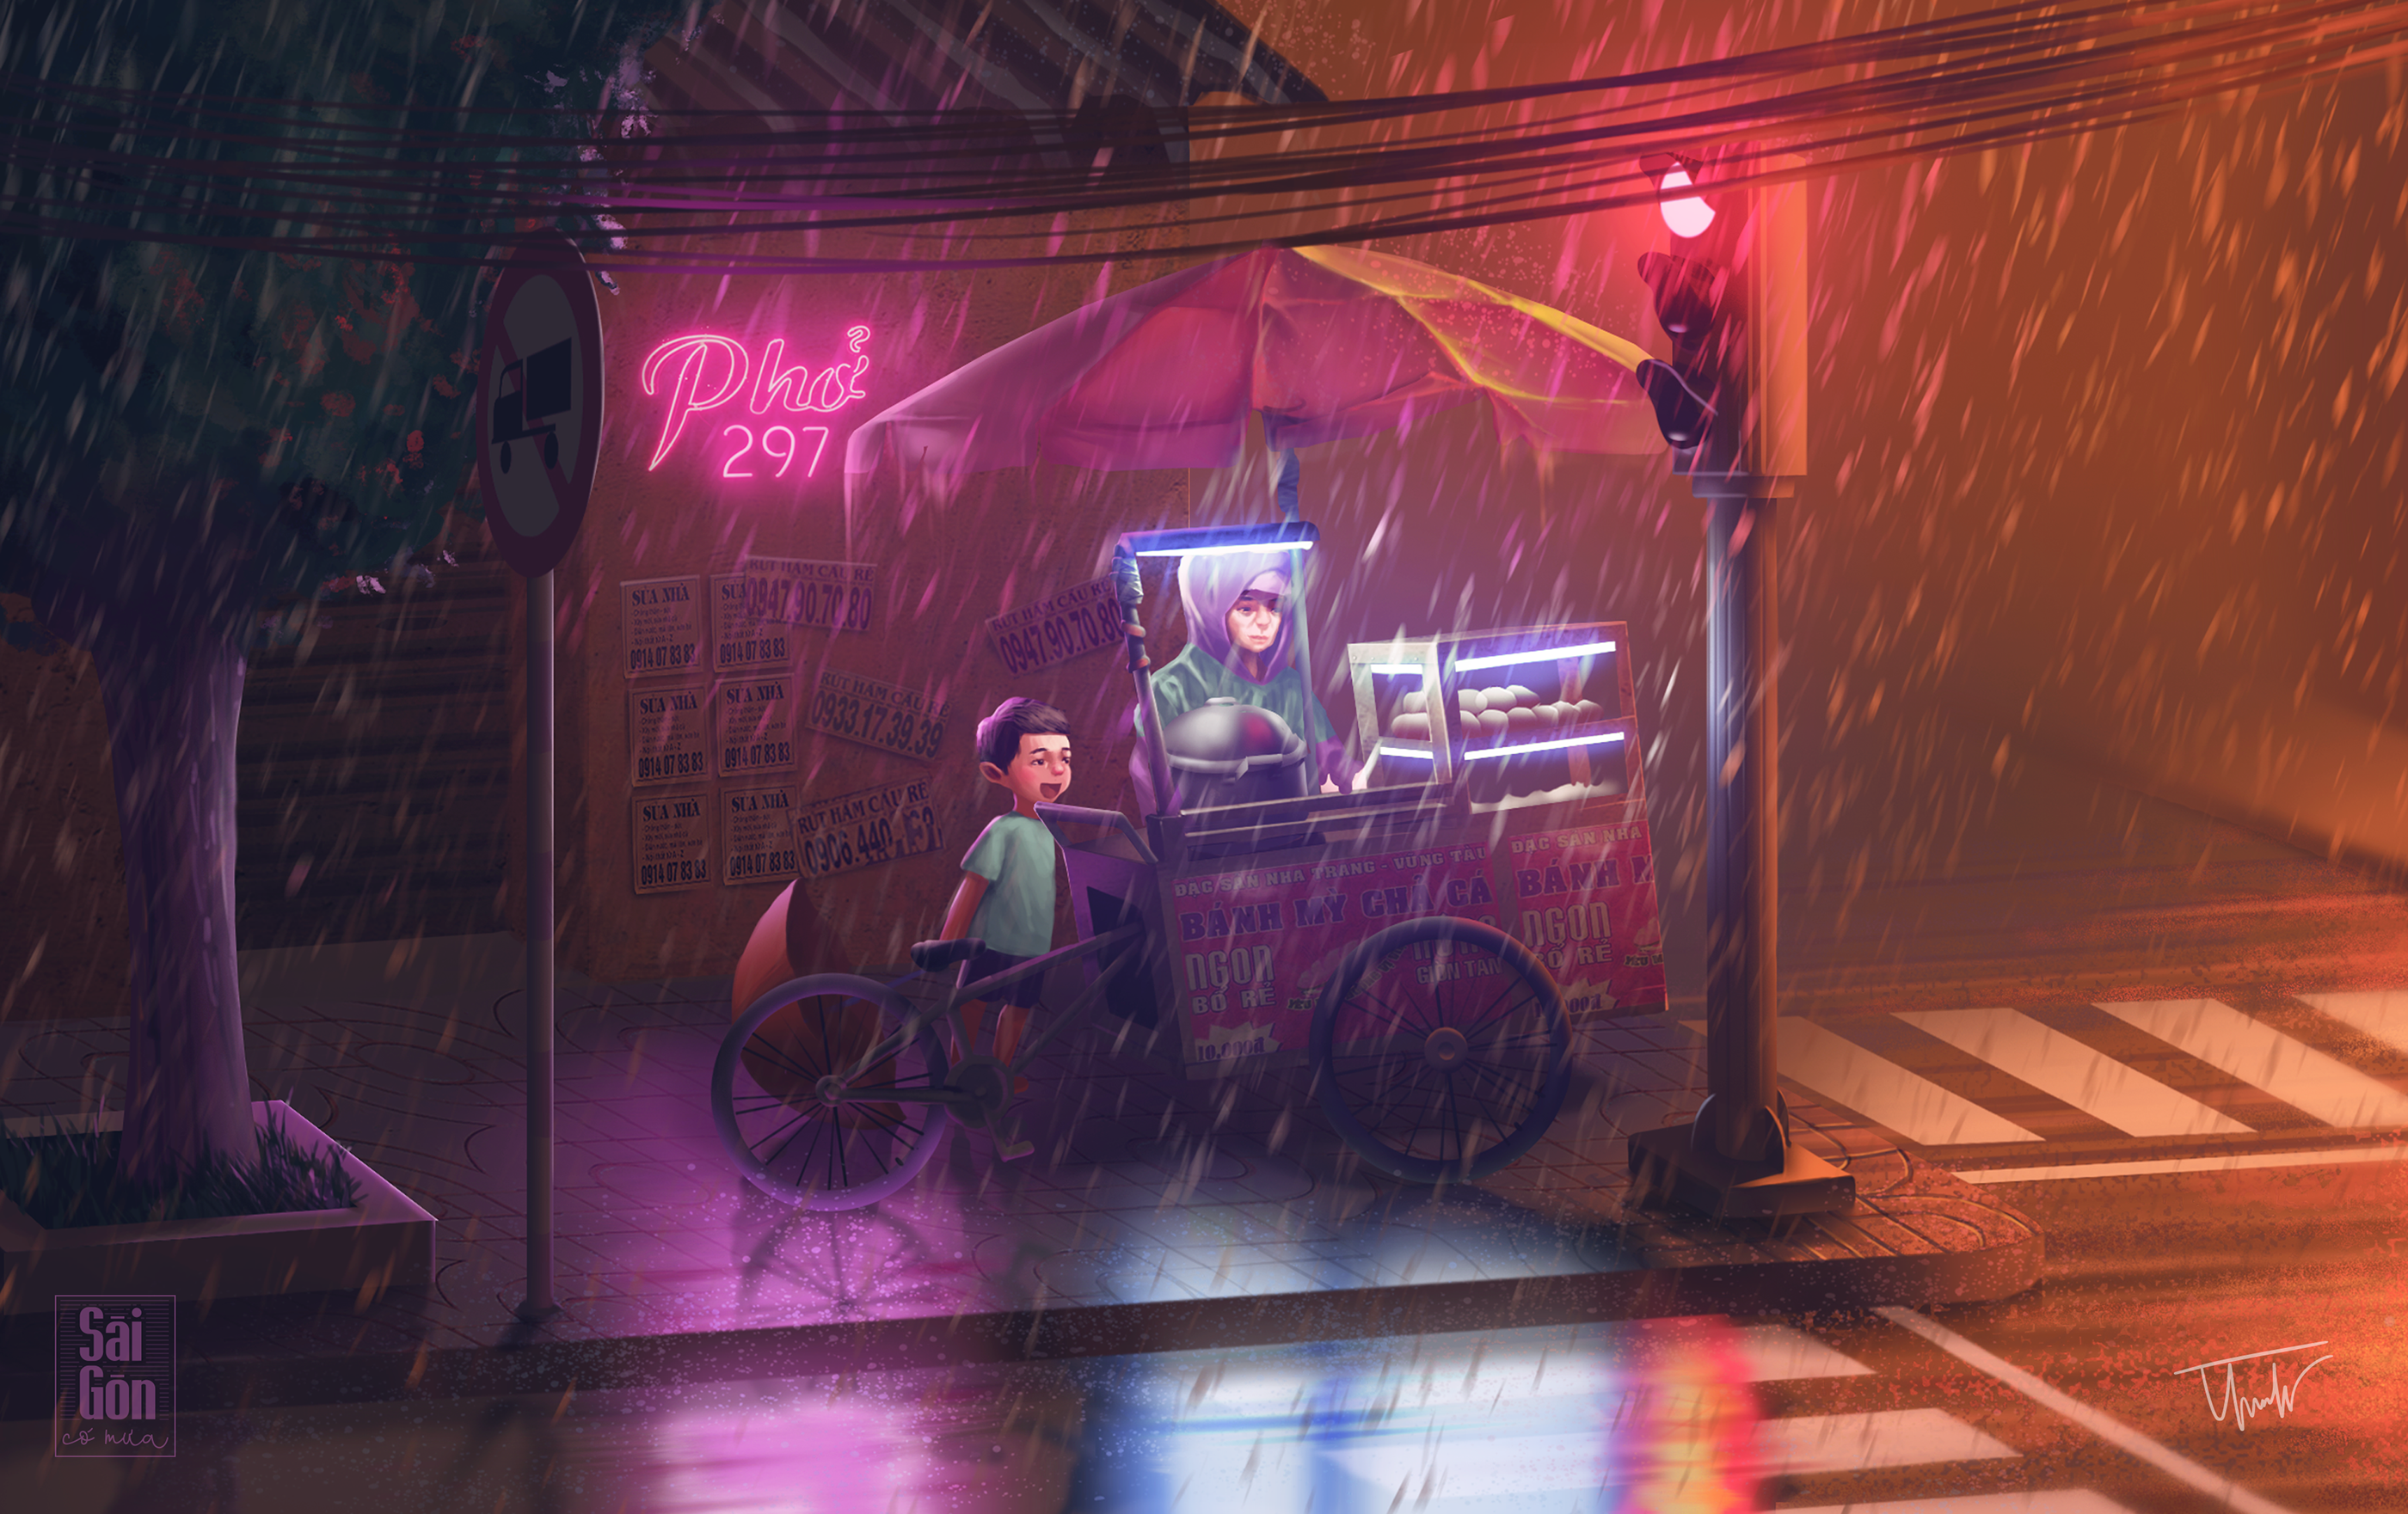 Saigon Rainy Days through Illustrations